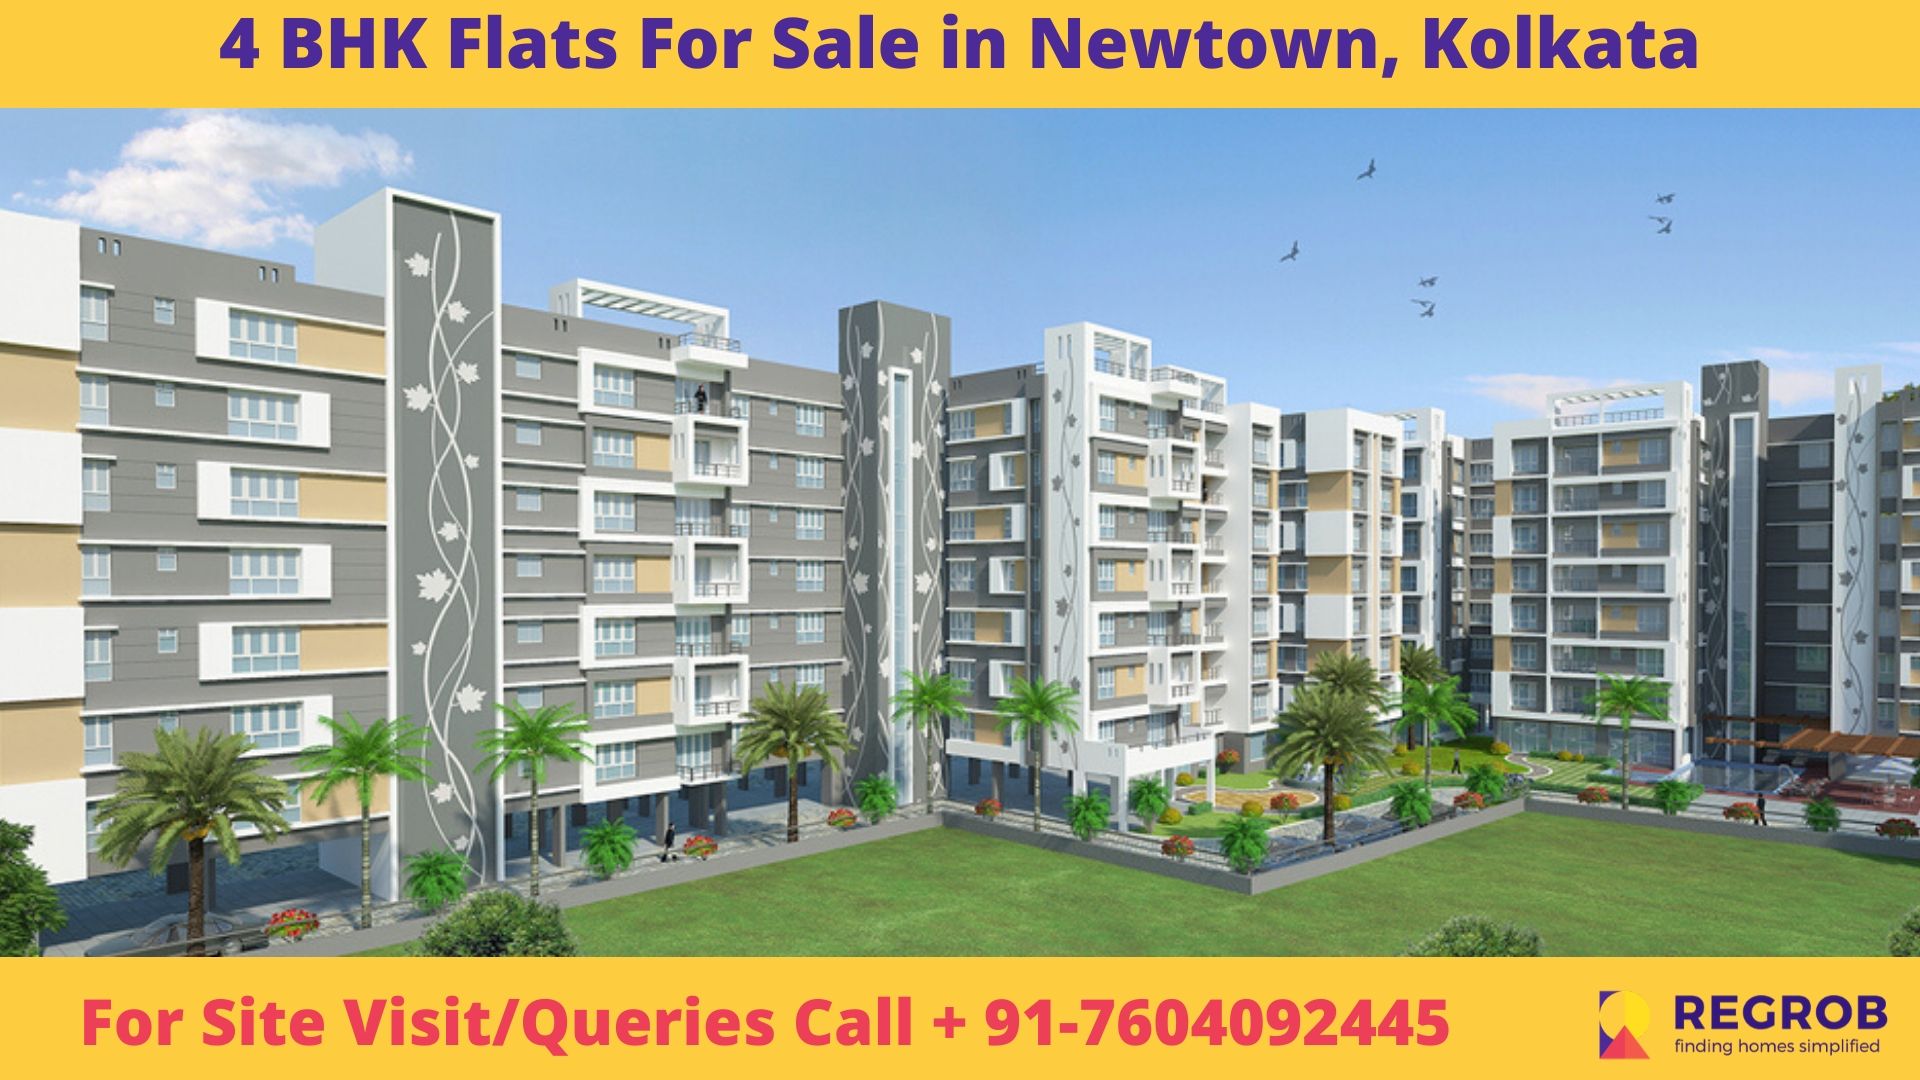 4 BHK Flats For Sale in Newtown, Kolkata